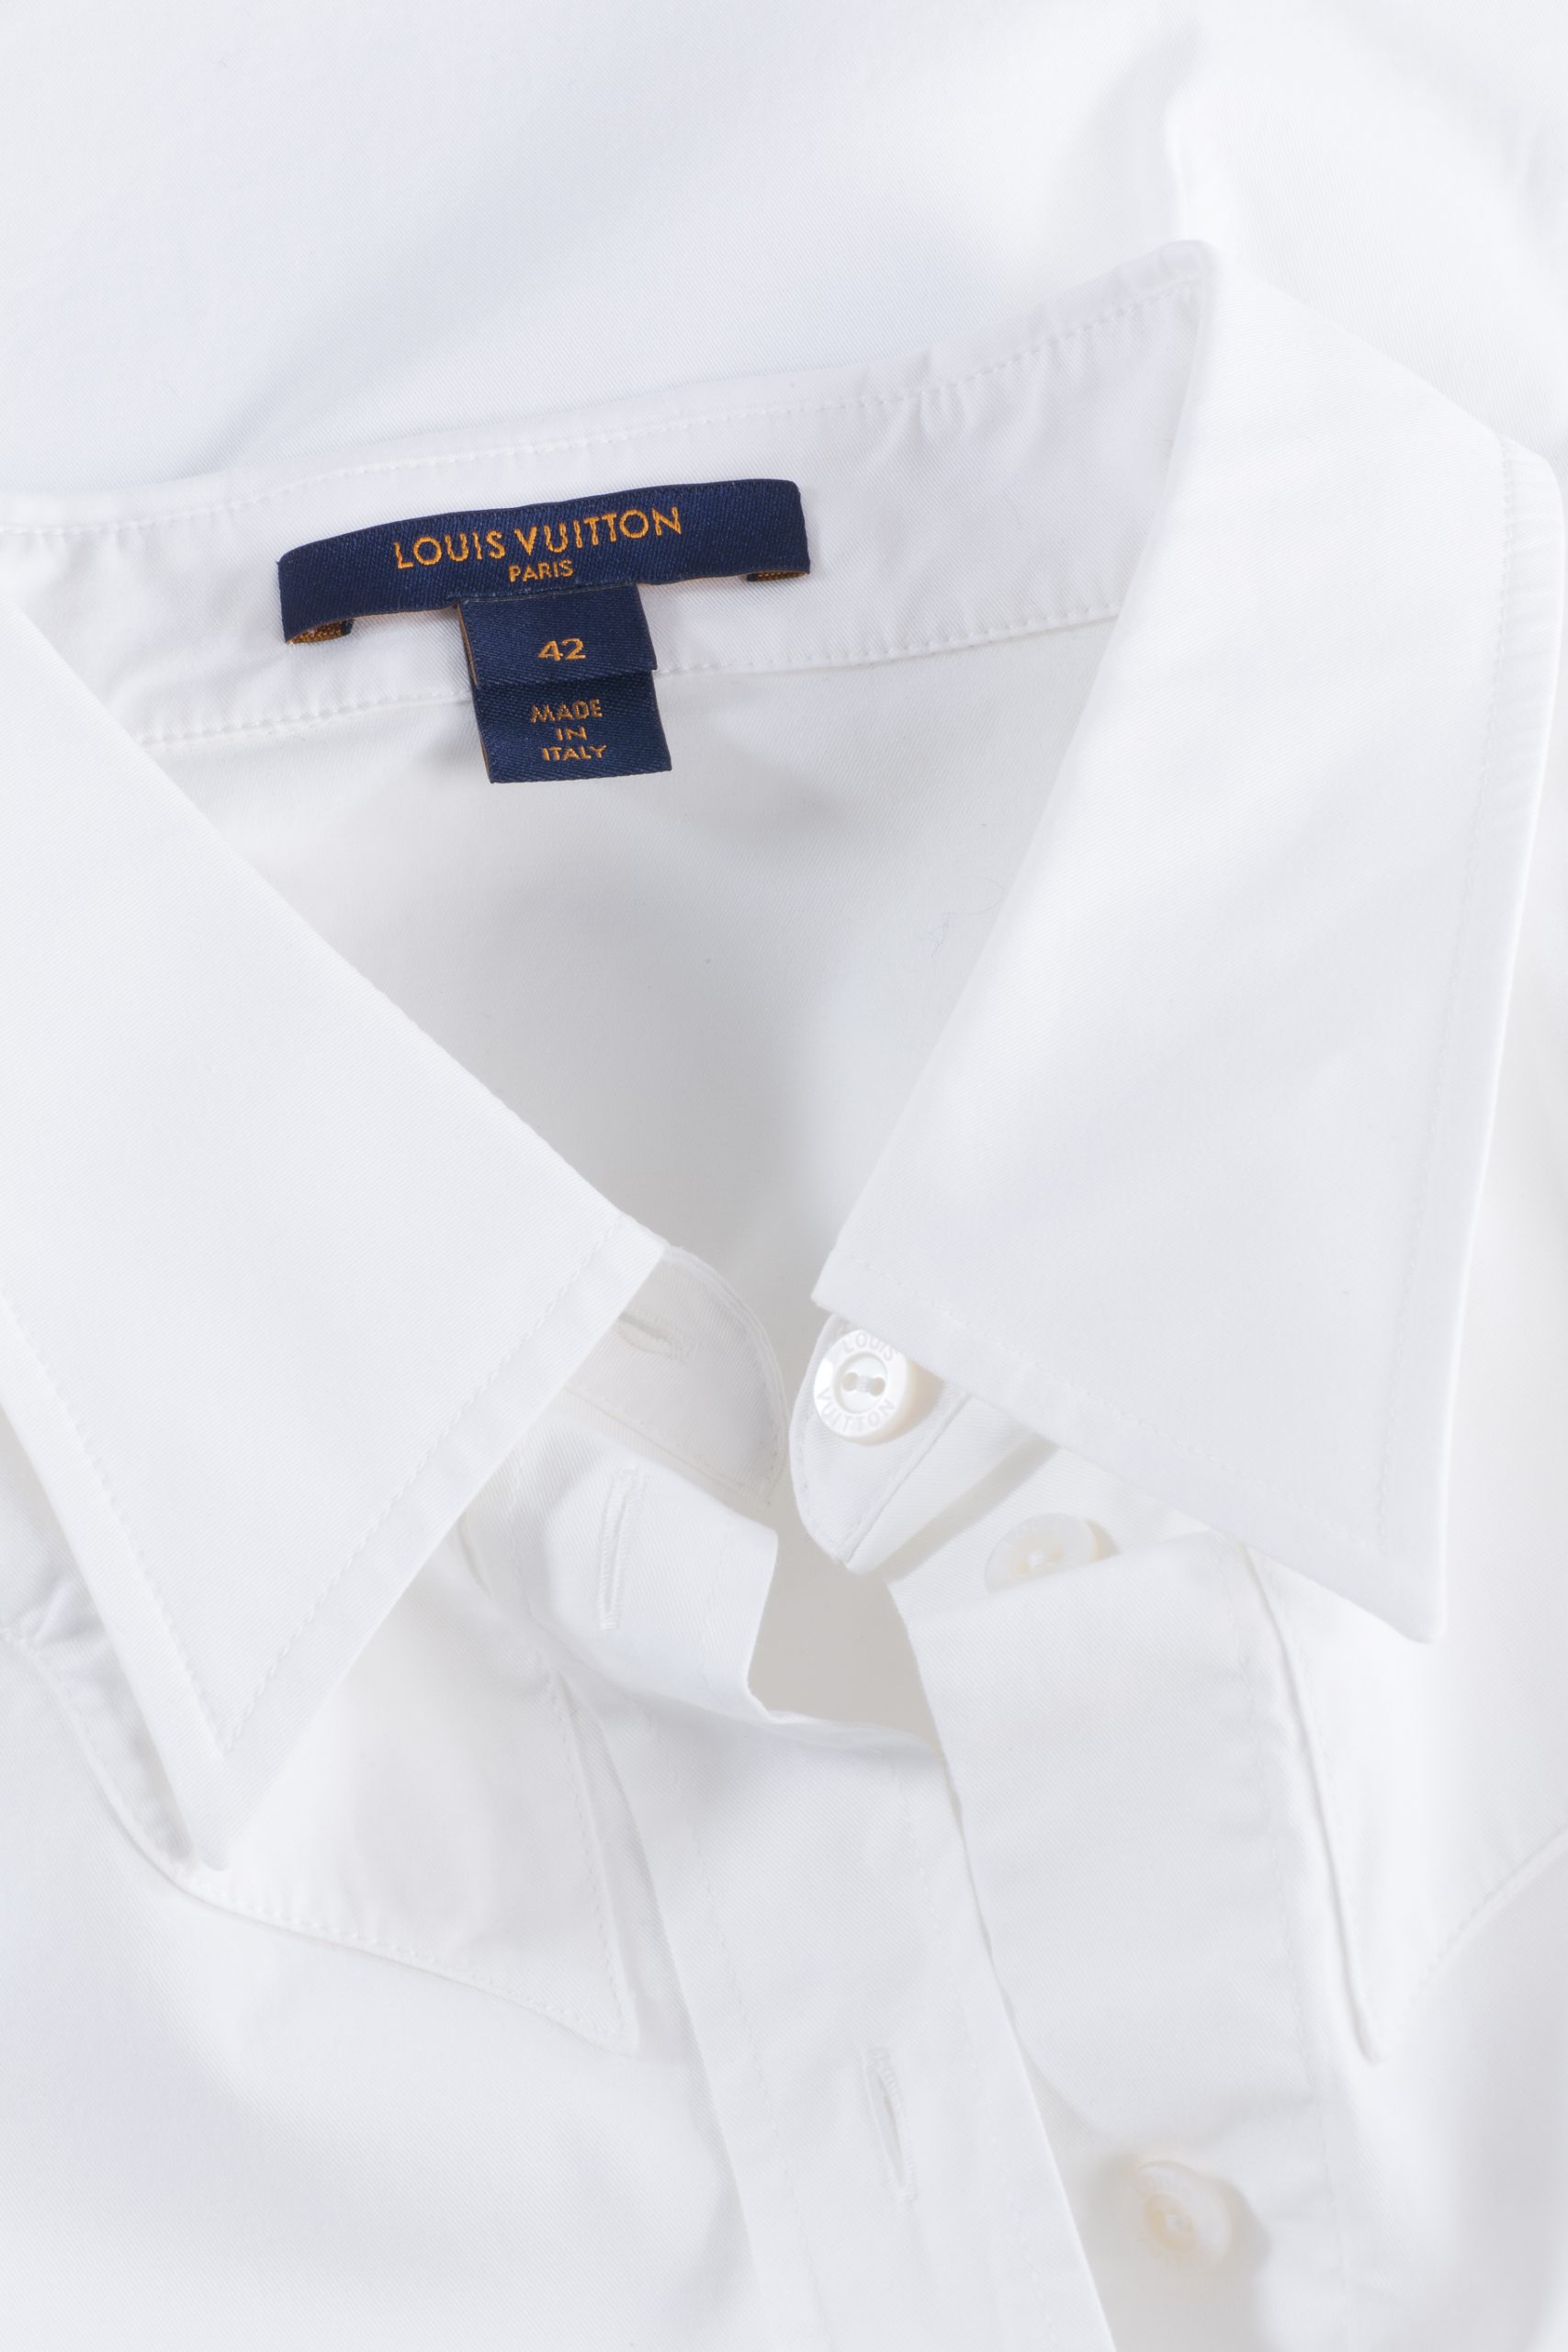 vuitton white shirt